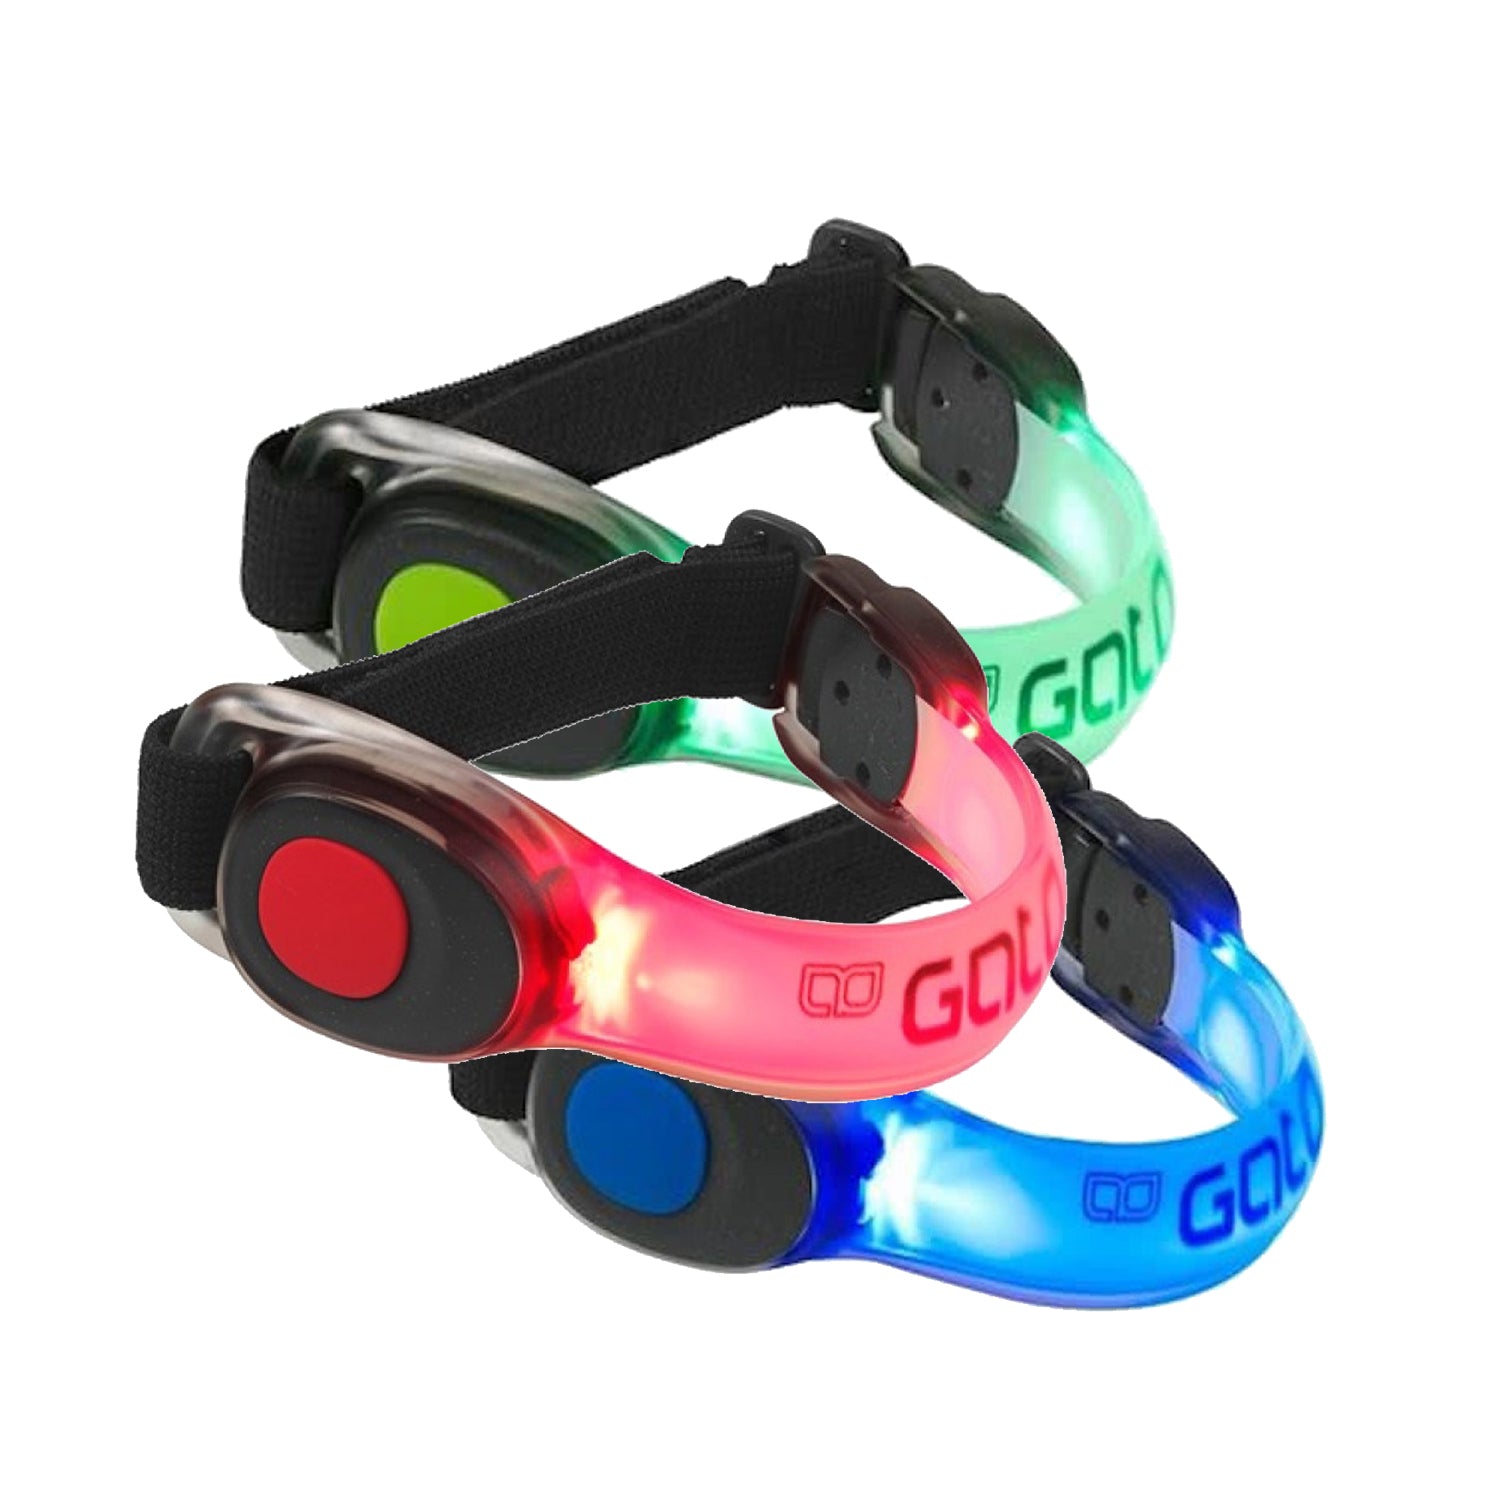 GATO USB Neon LED Running Arm Light – Running Form